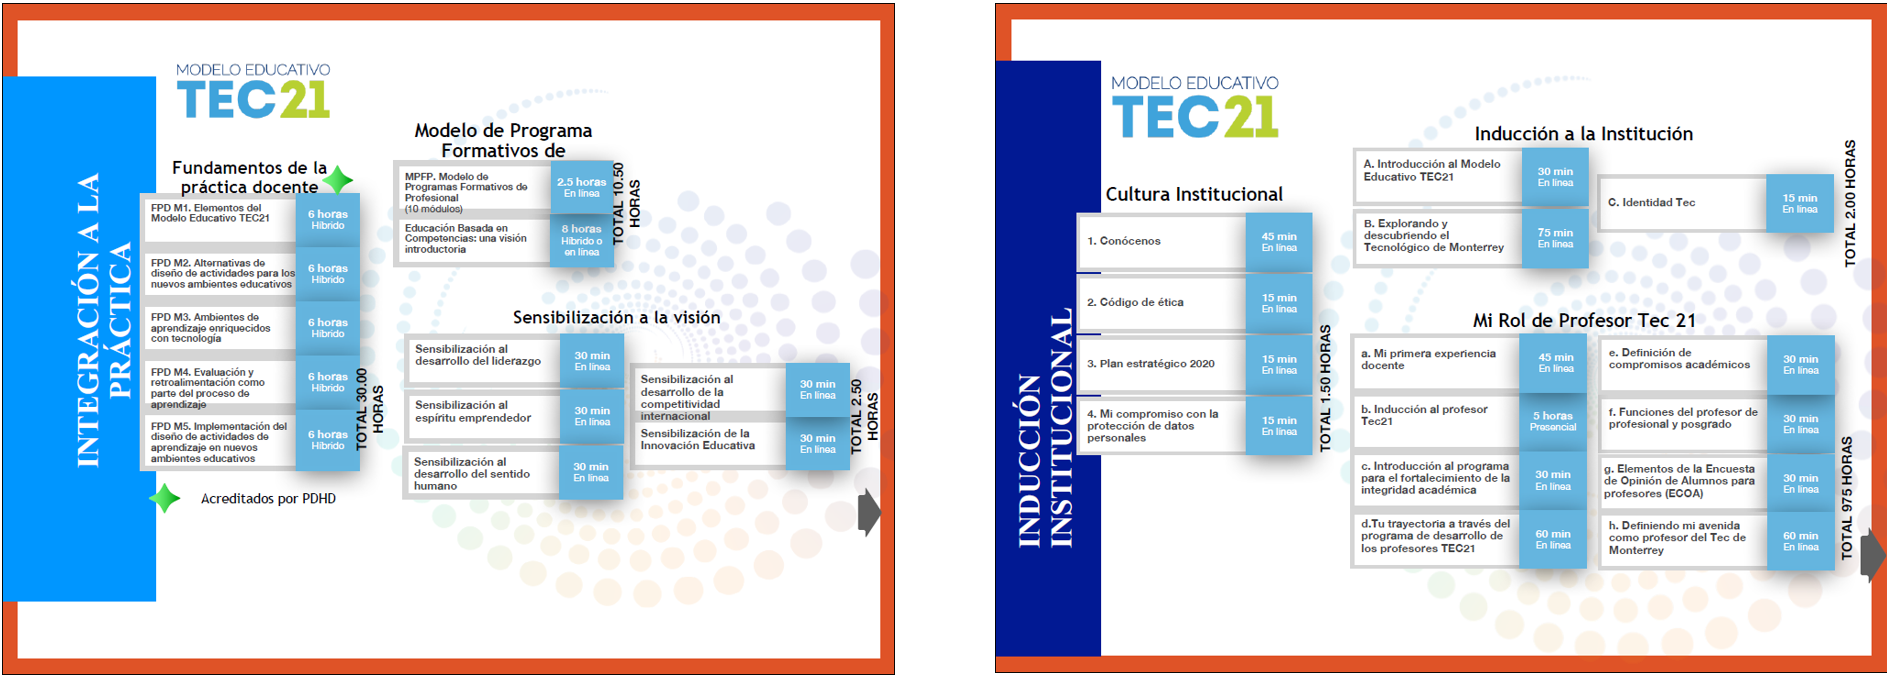 MTE - Modelo Educativo TEC 21